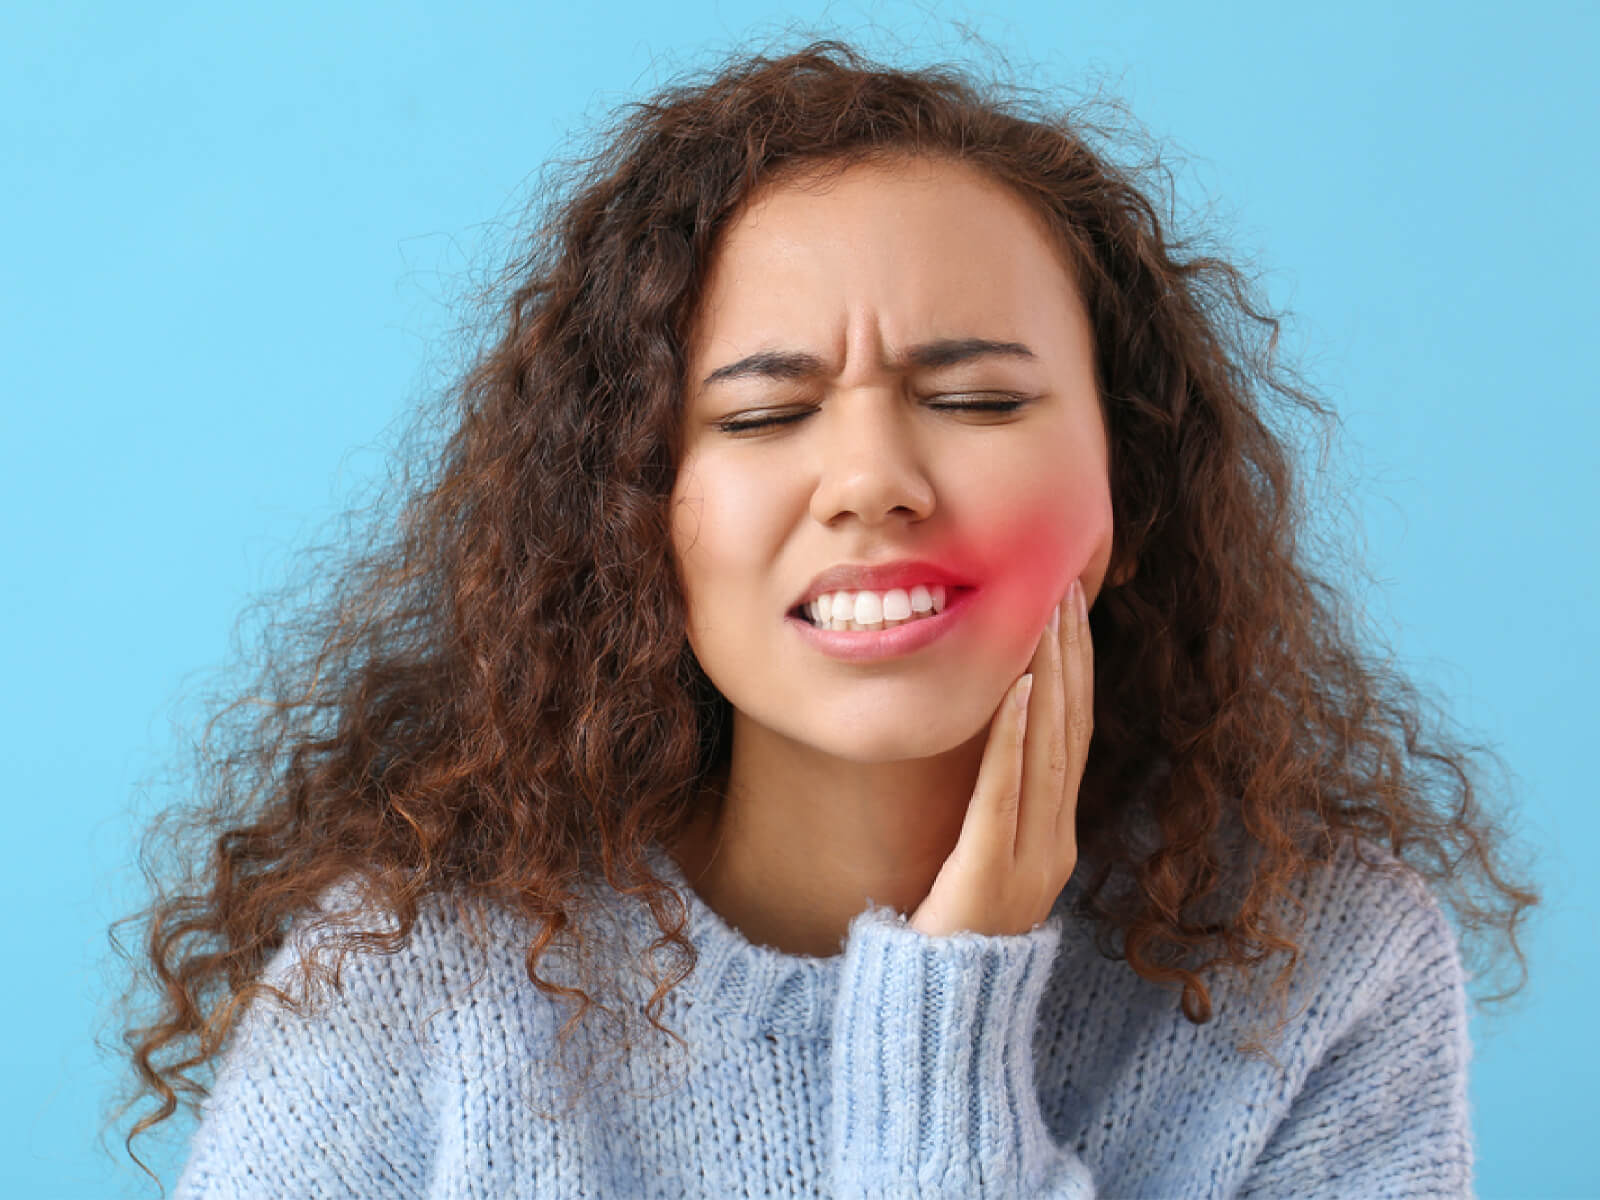 Are Gum Boils Painful?